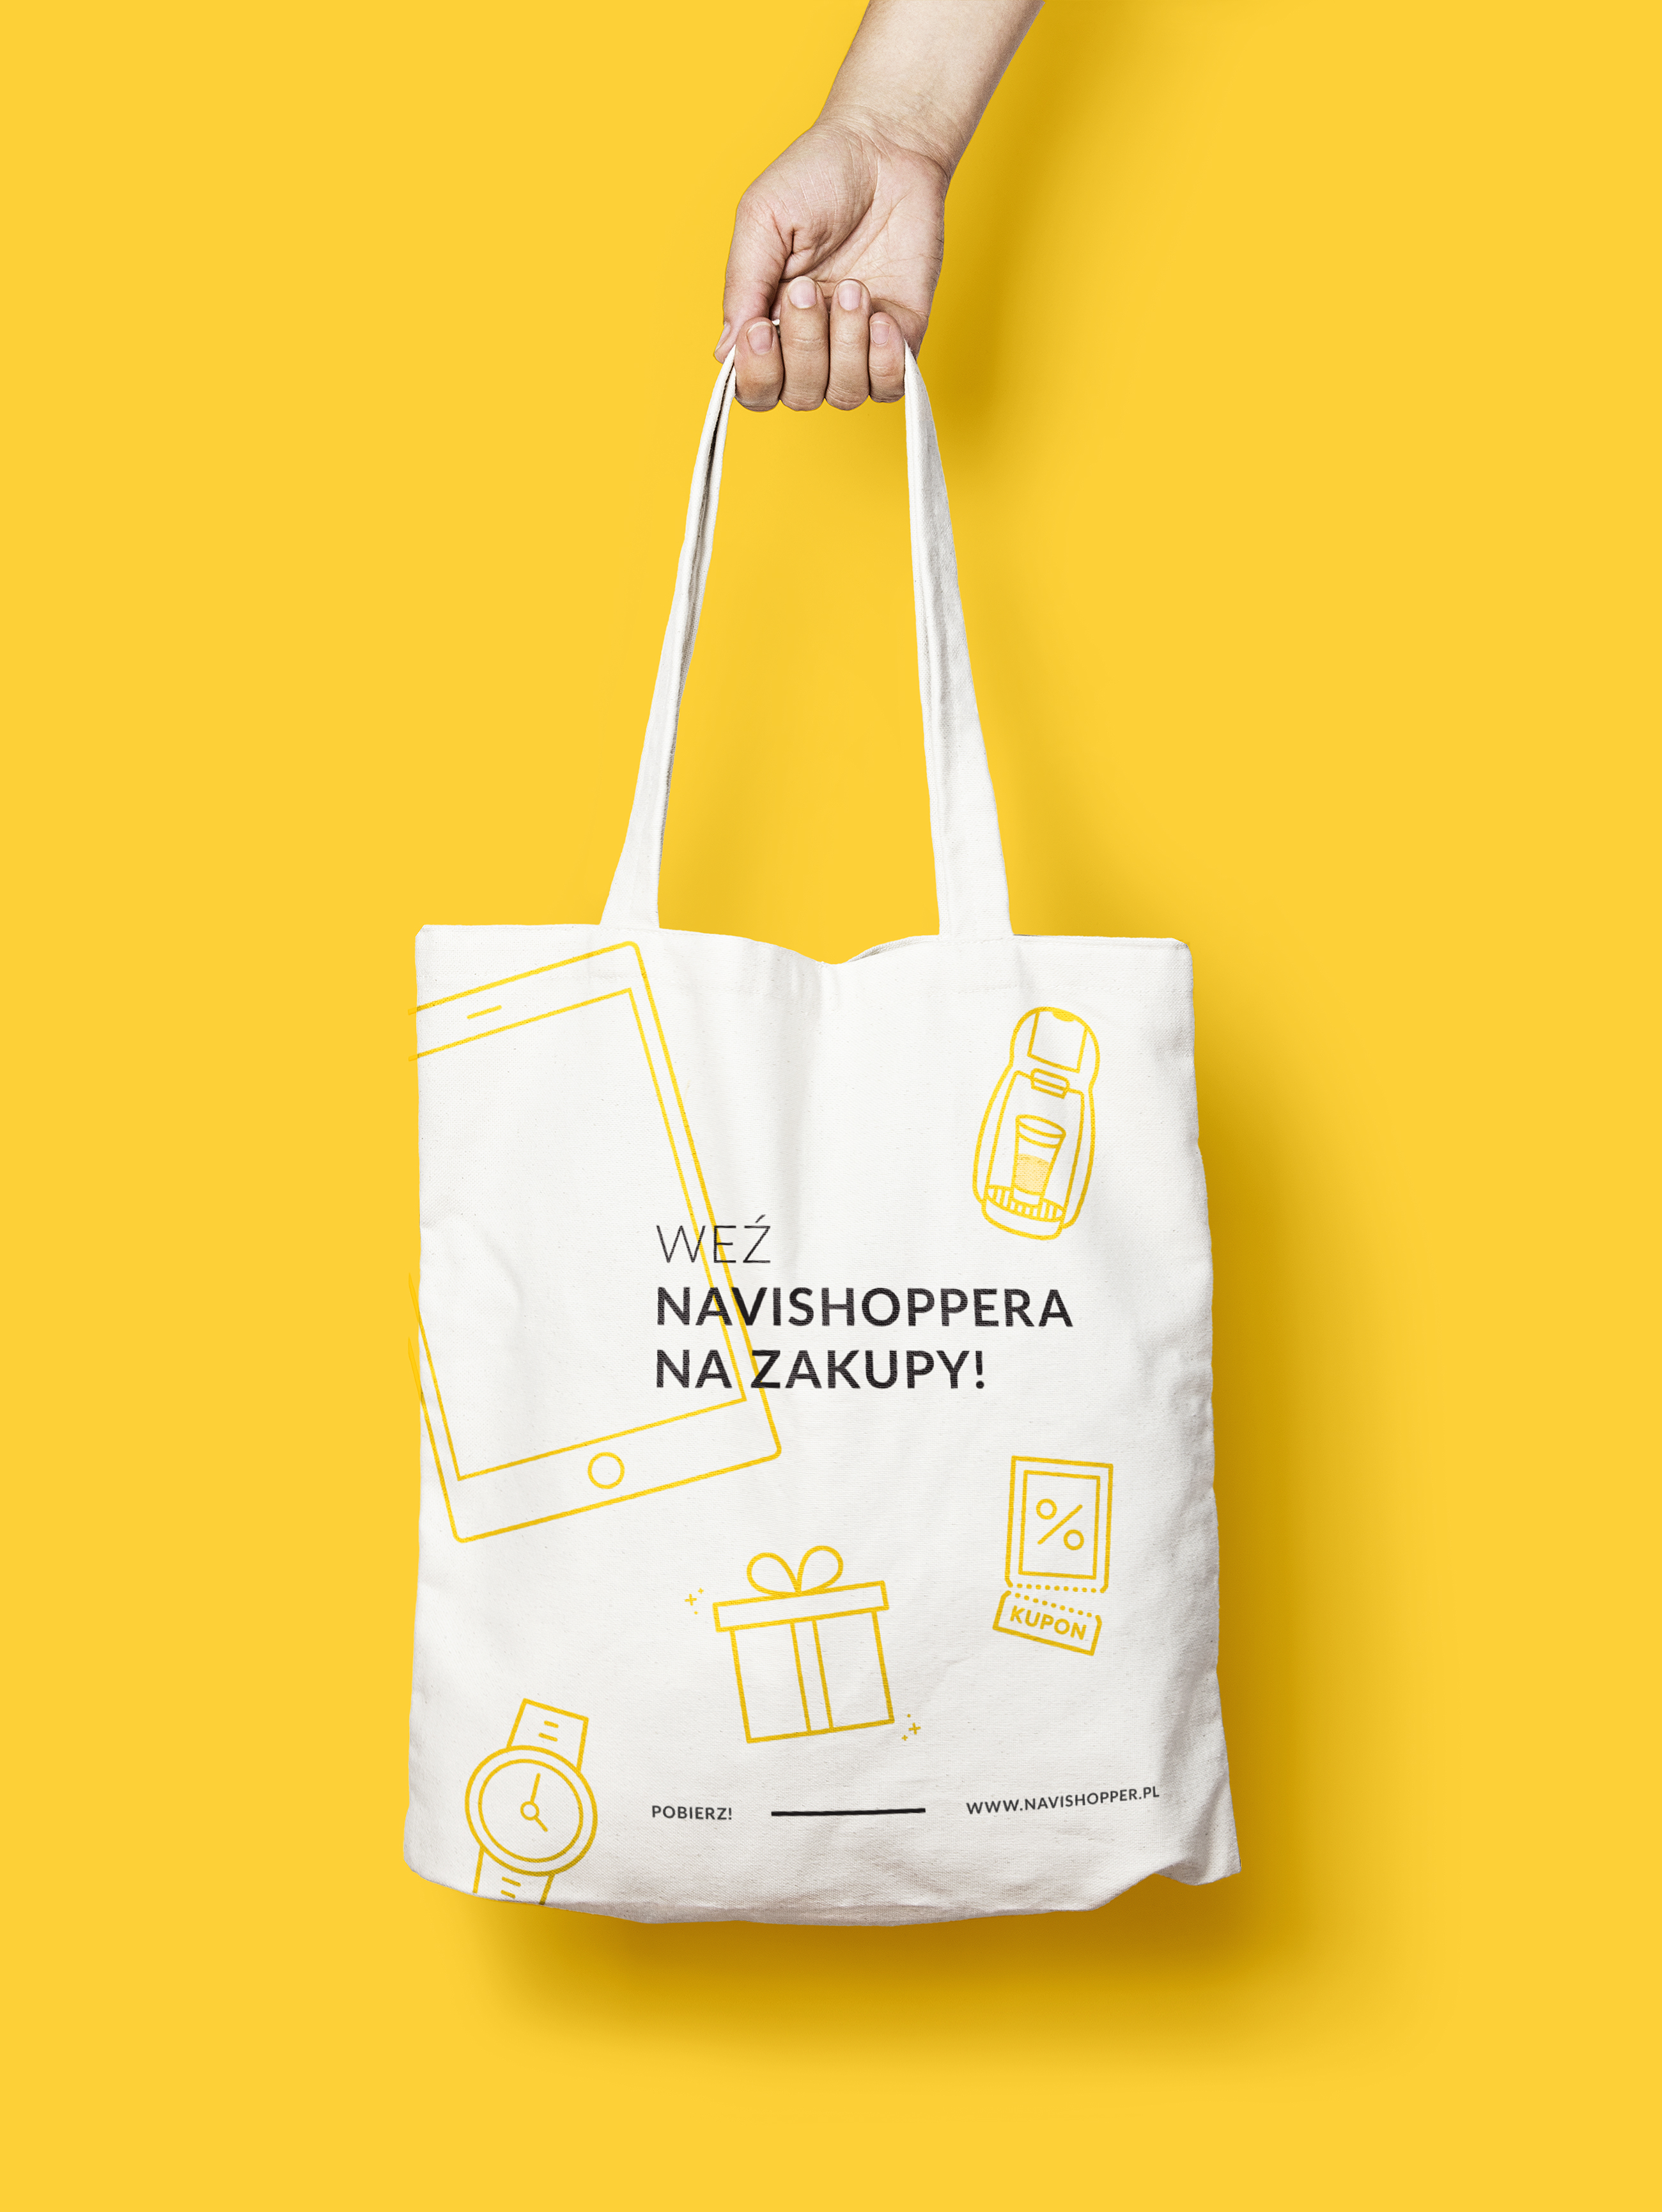 Navishopper shopping bag by Mateusz Turbiński on Dribbble